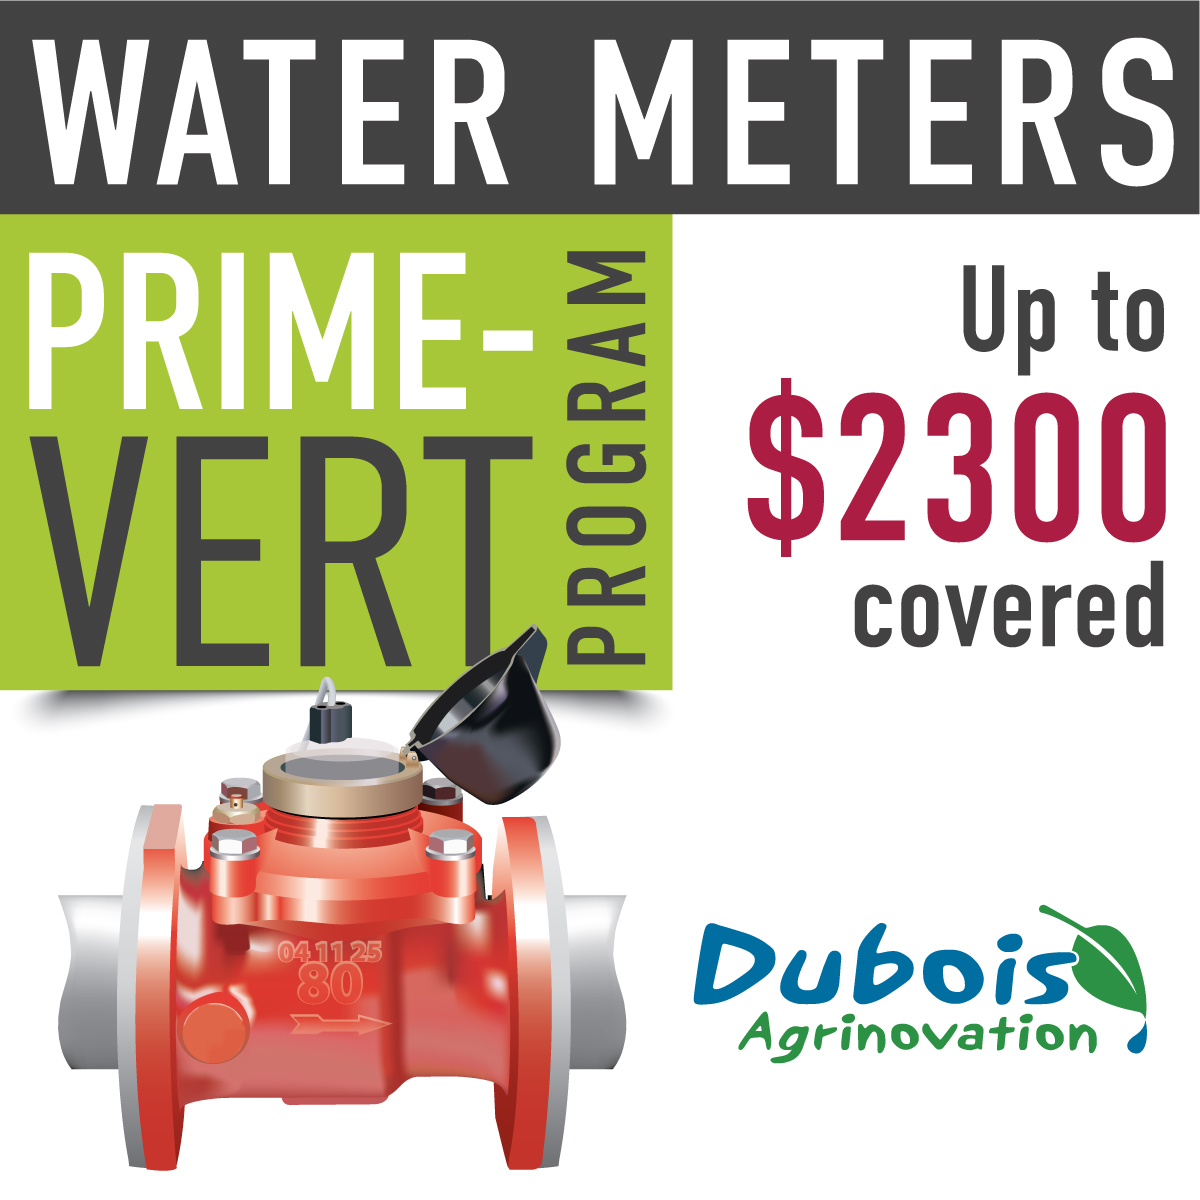 Prime vert - Subsidies  Dubois Agrinovation US